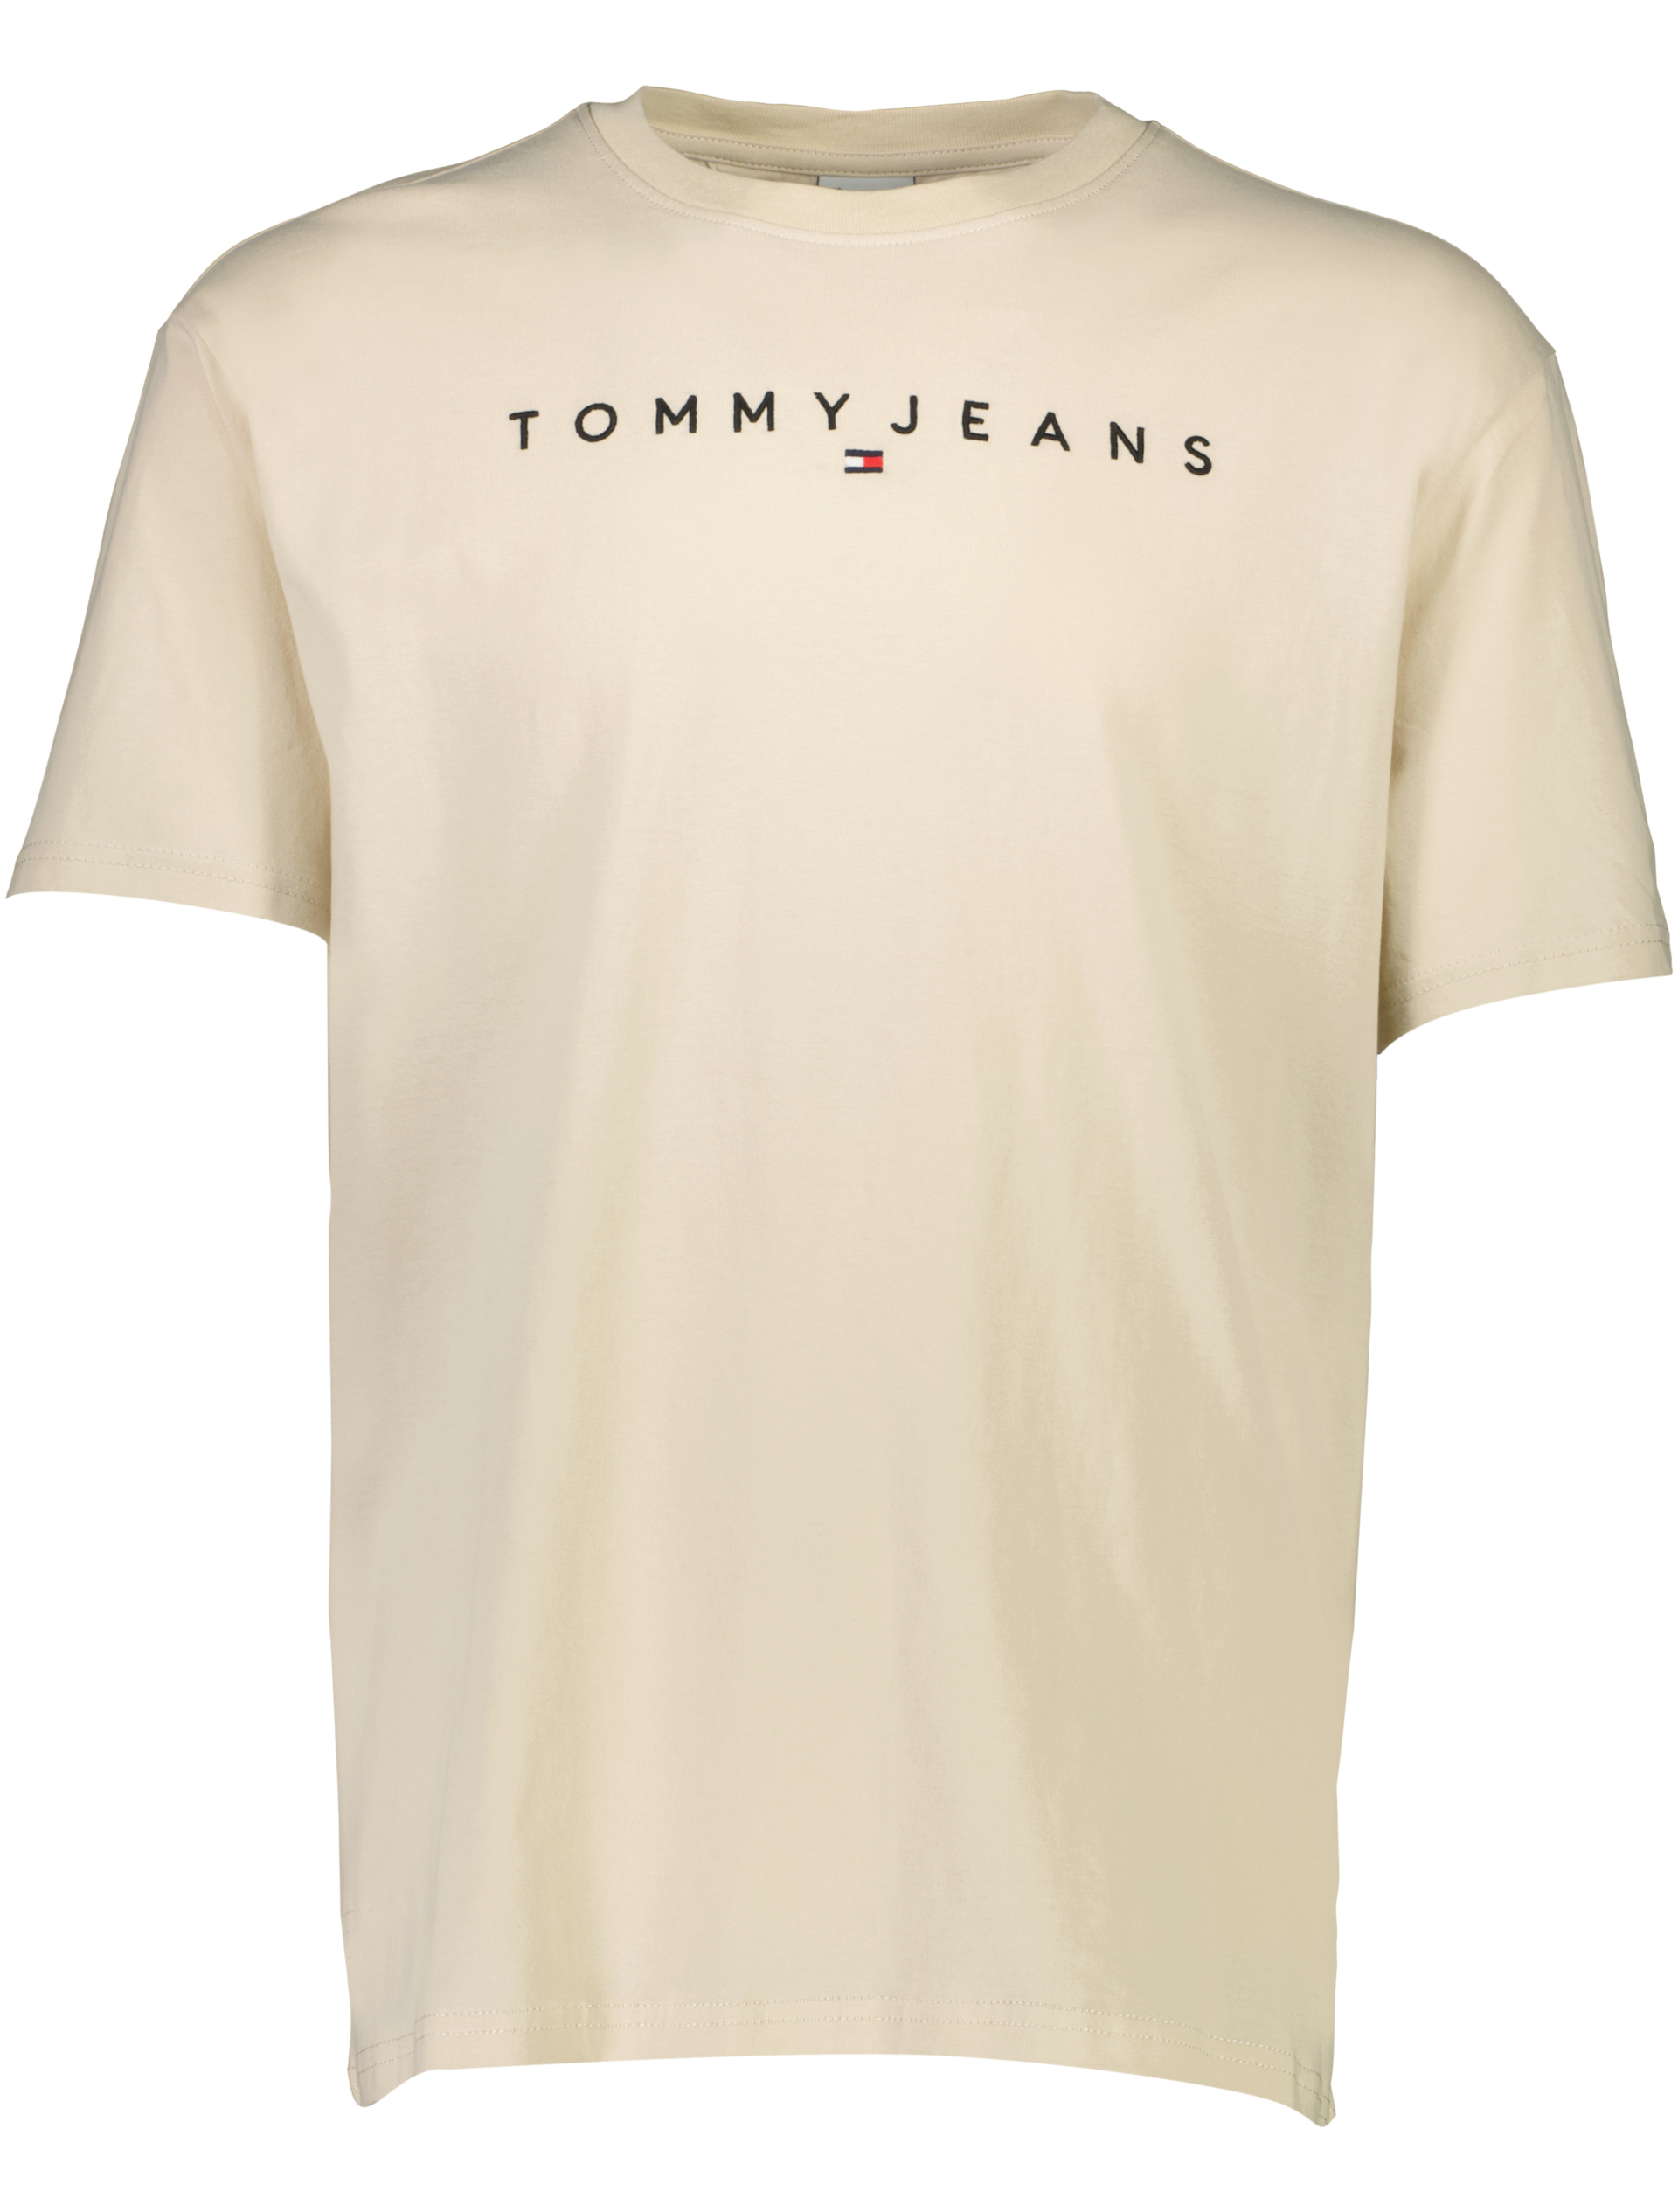 Tommy Jeans T-shirt hvid / acg newsprint